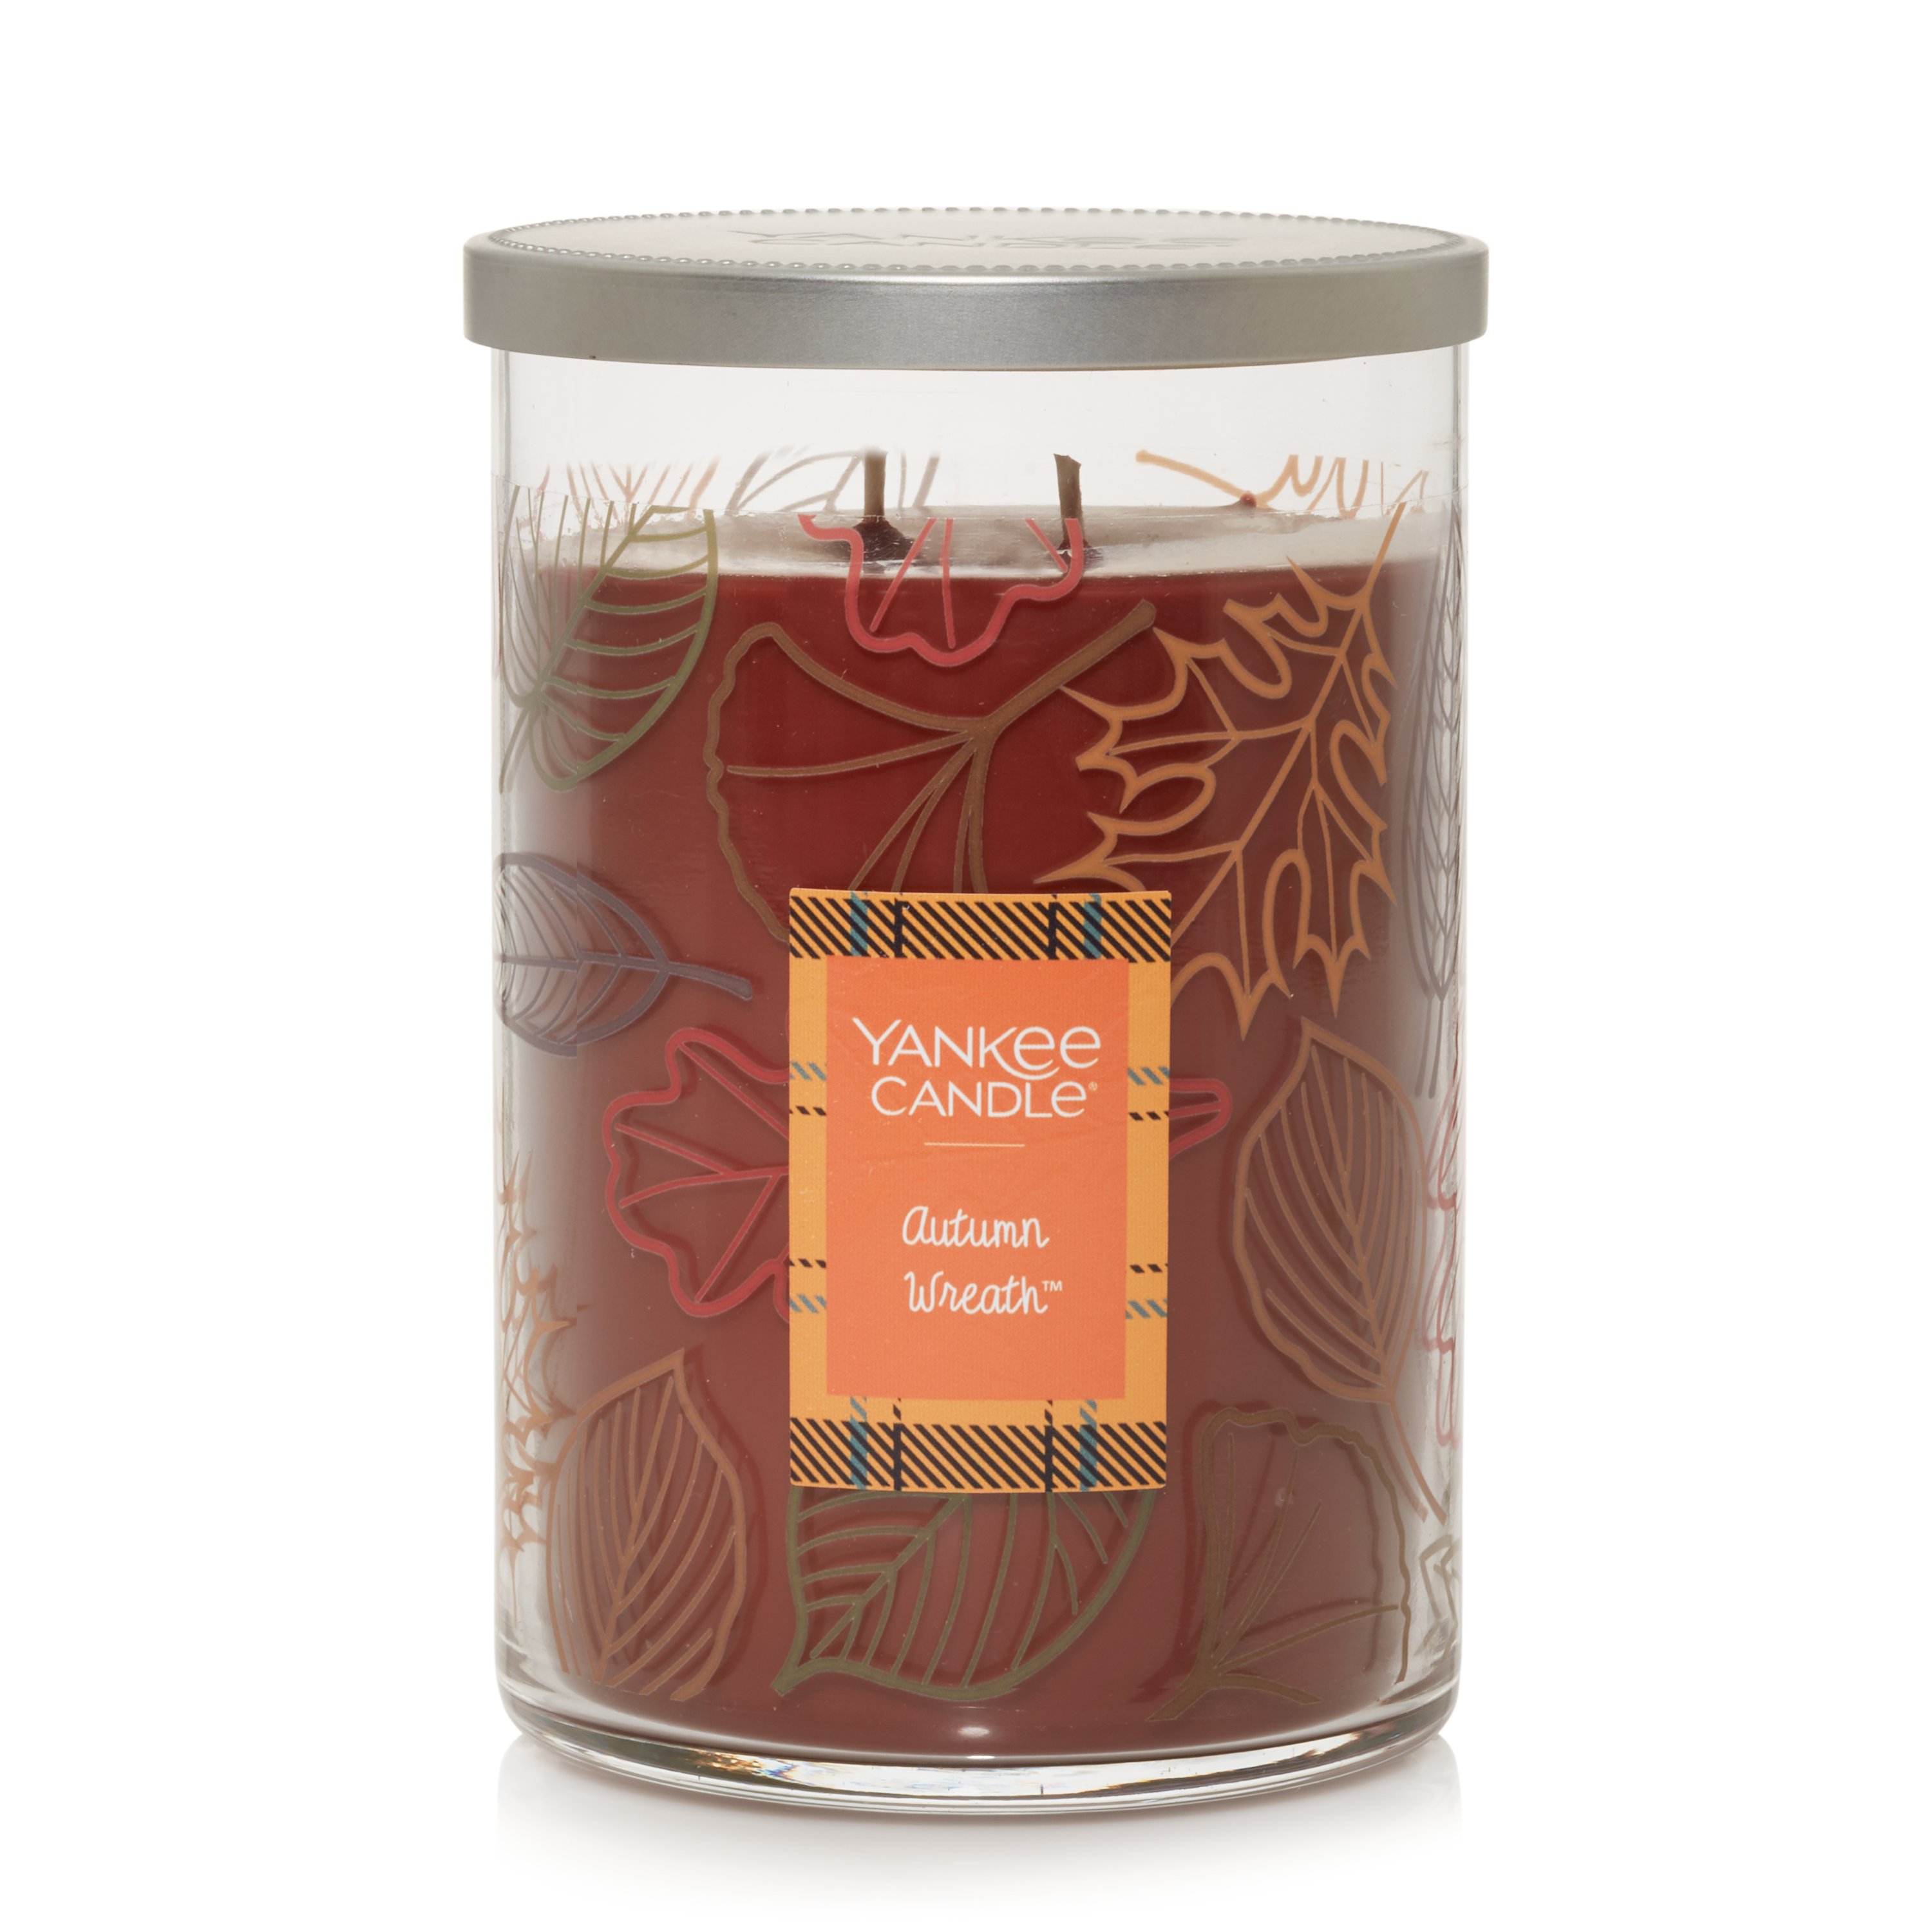 Yankee Candle Autumn Wreath - Original Large Jar candle 